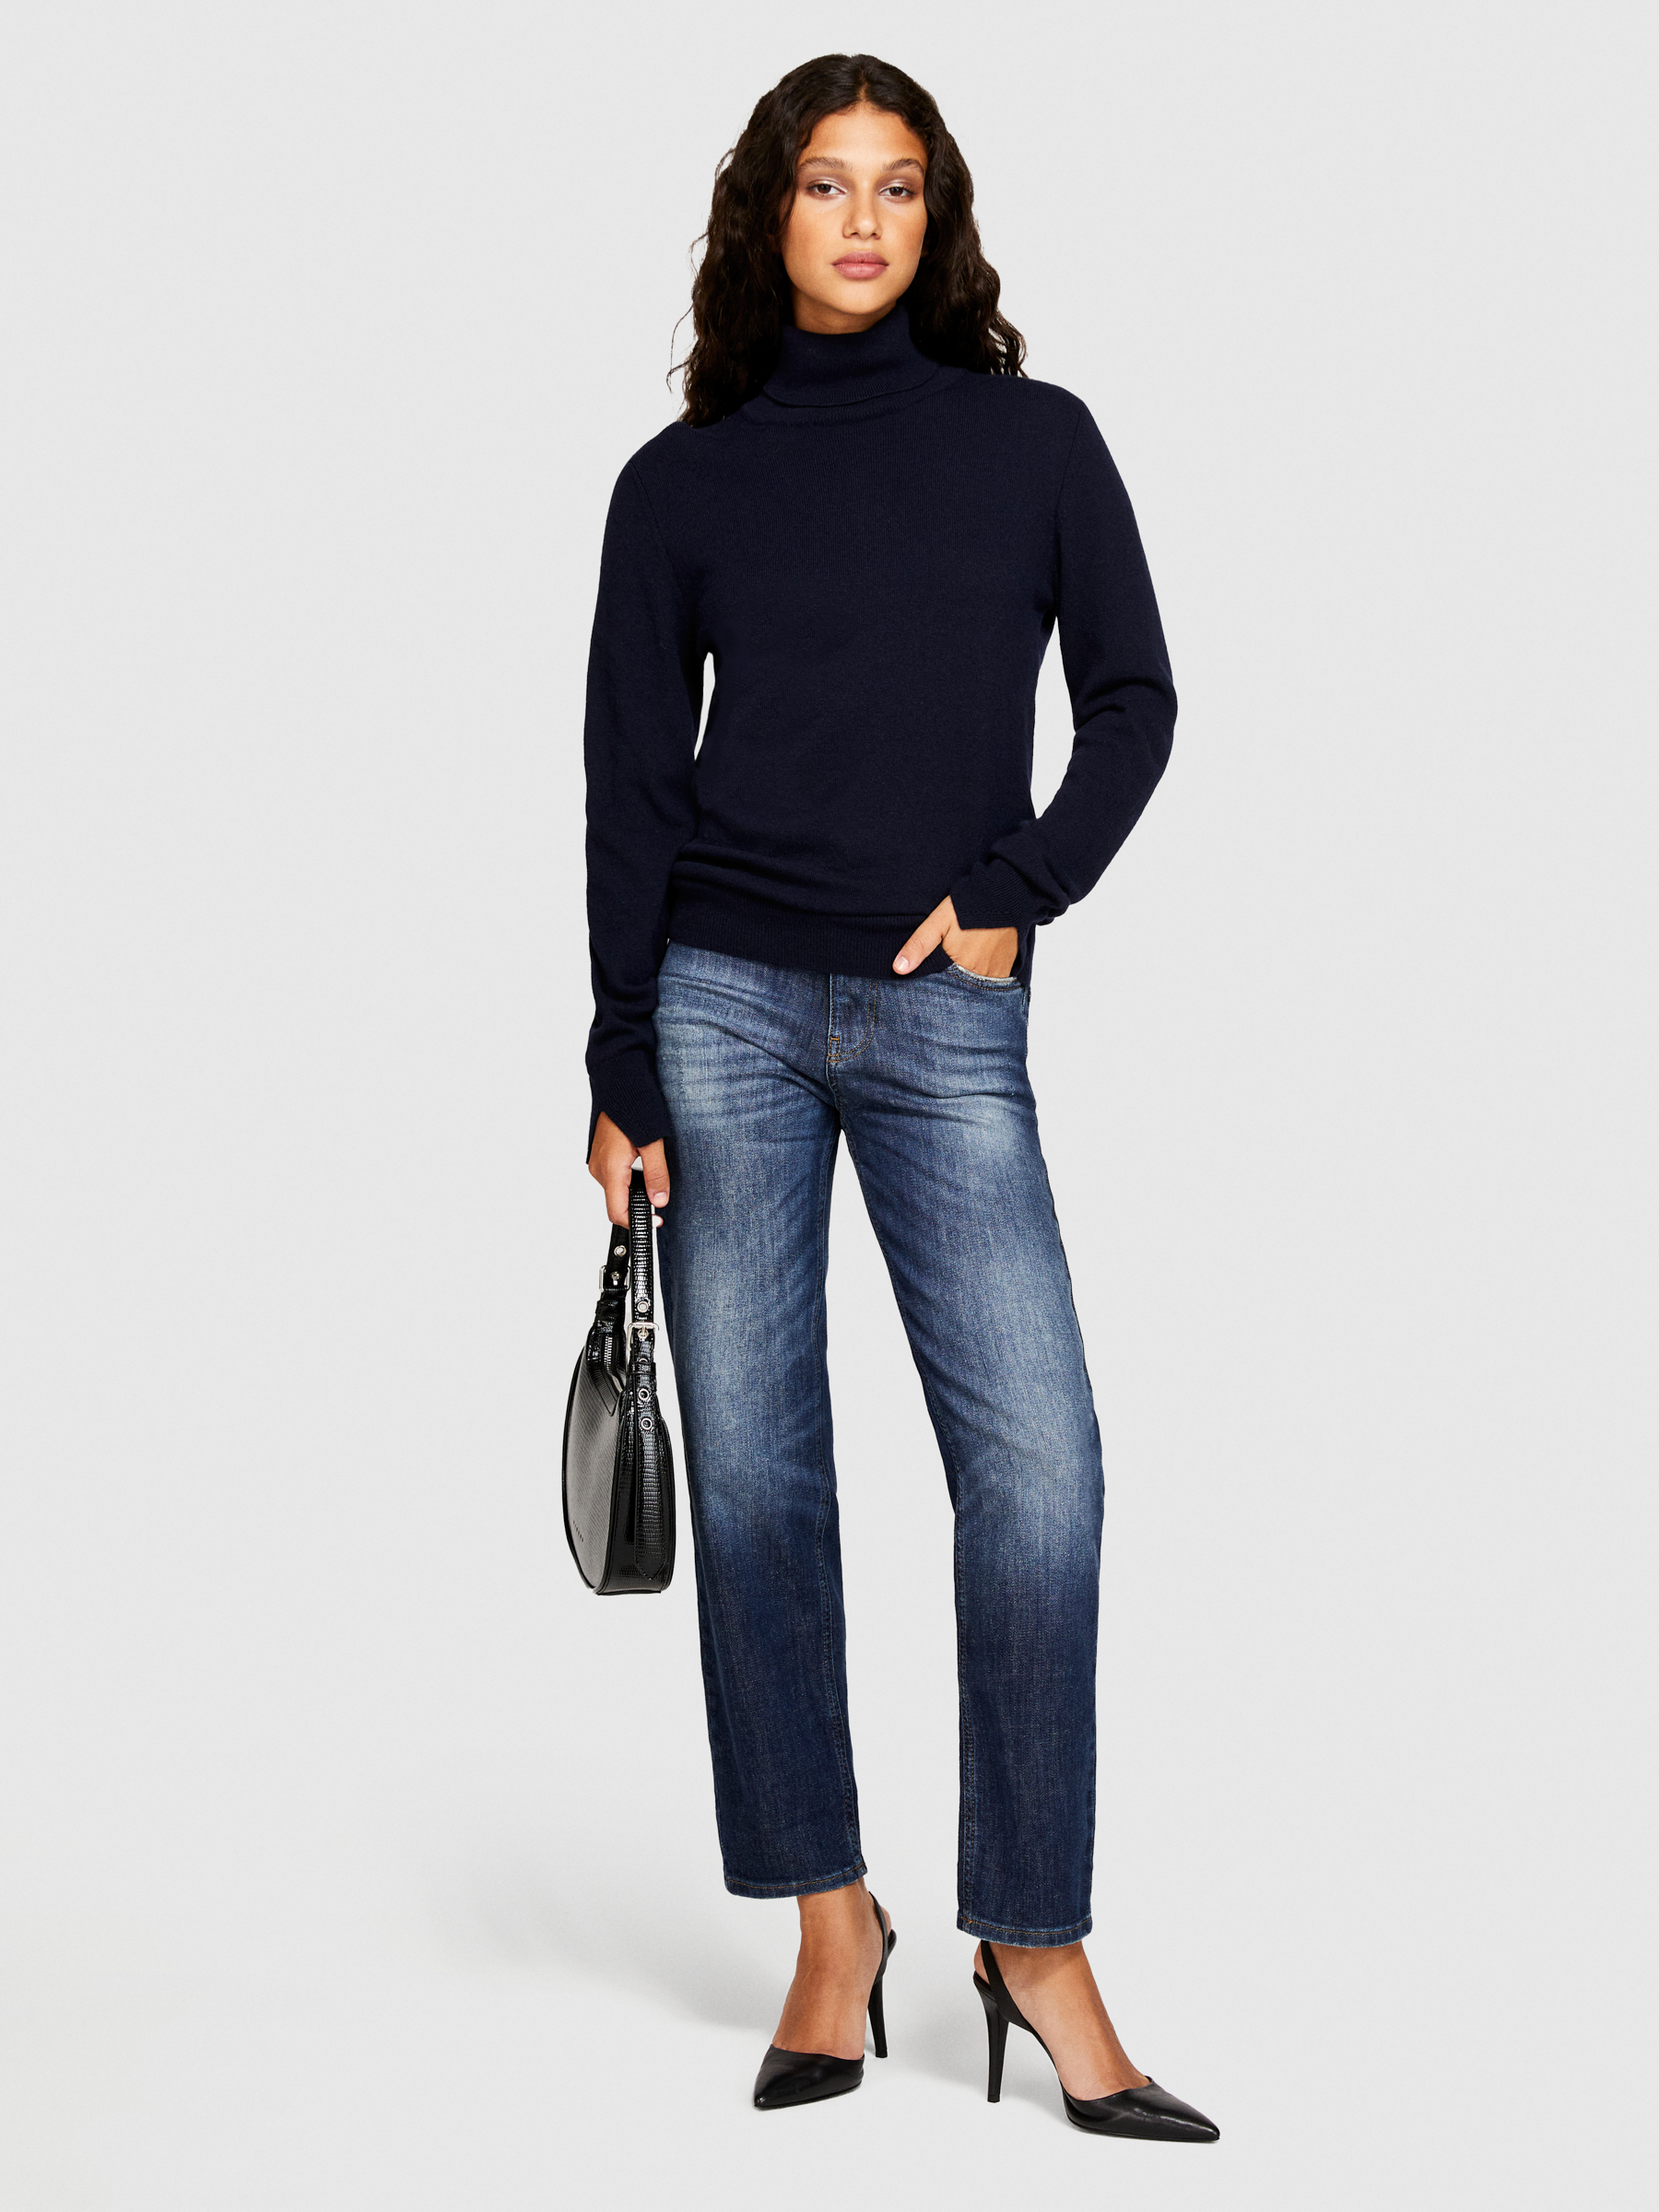 Sisley - High Neck Sweater, Woman, Dark Blue, Size: XS